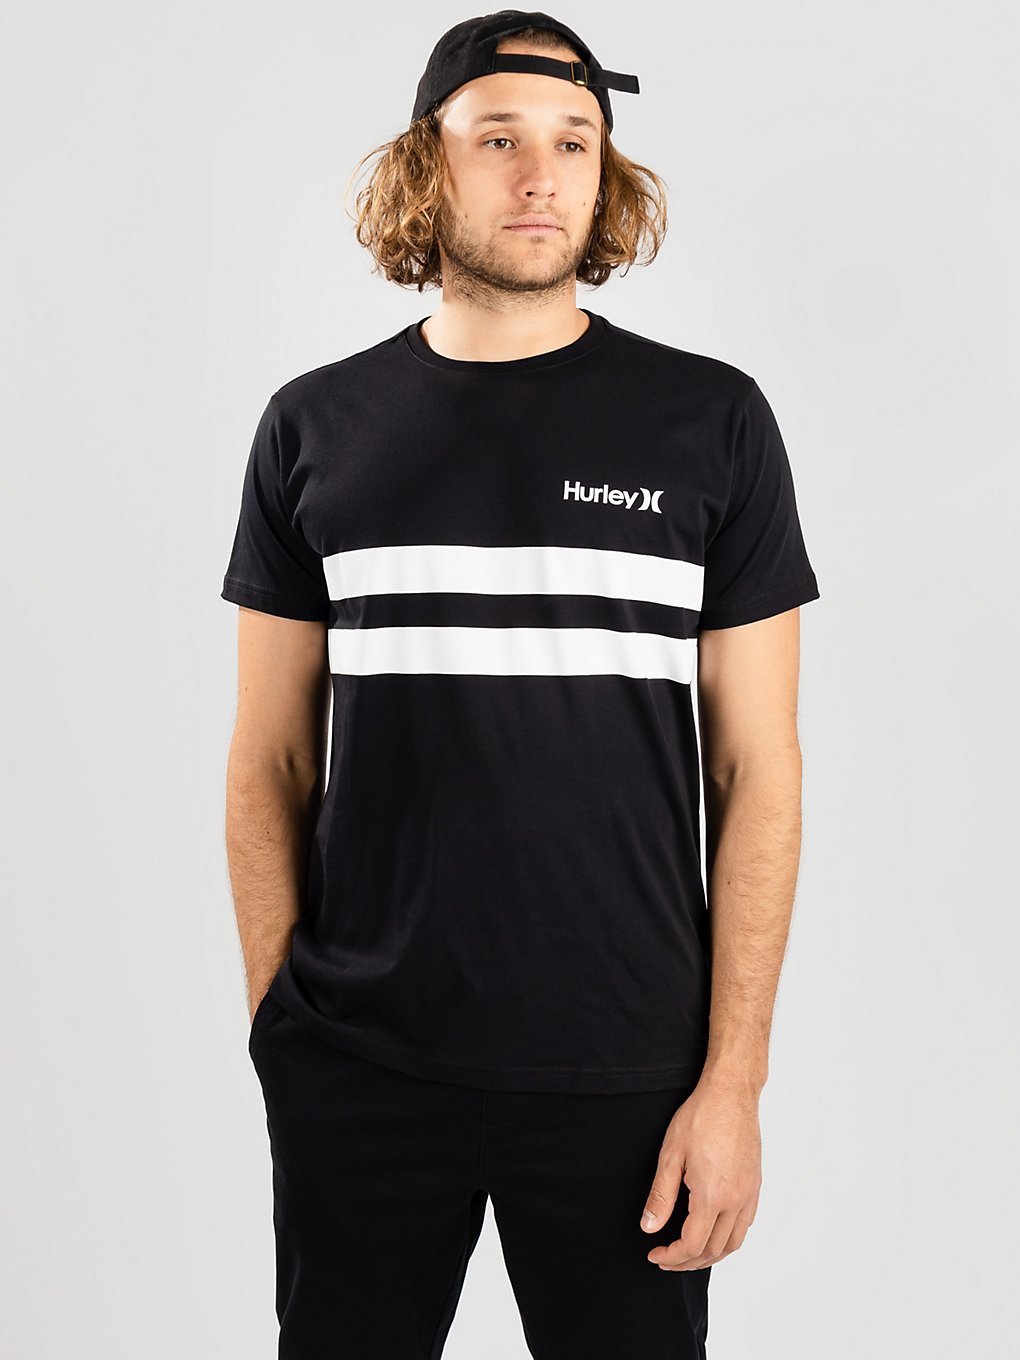 Hurley Oceancare Block Party T-Shirt black kaufen